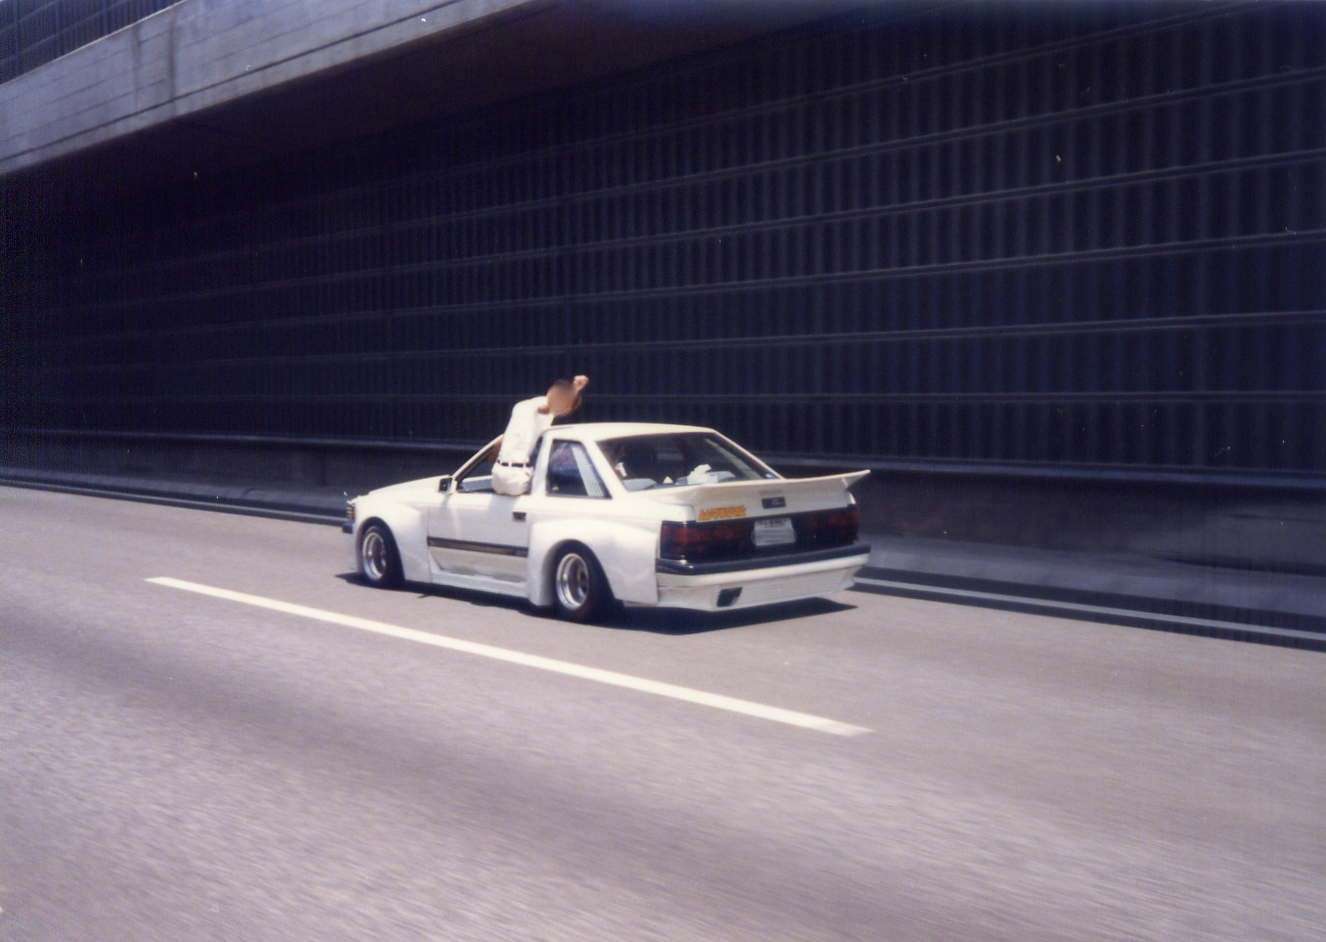 90s jdm cars wallpaper